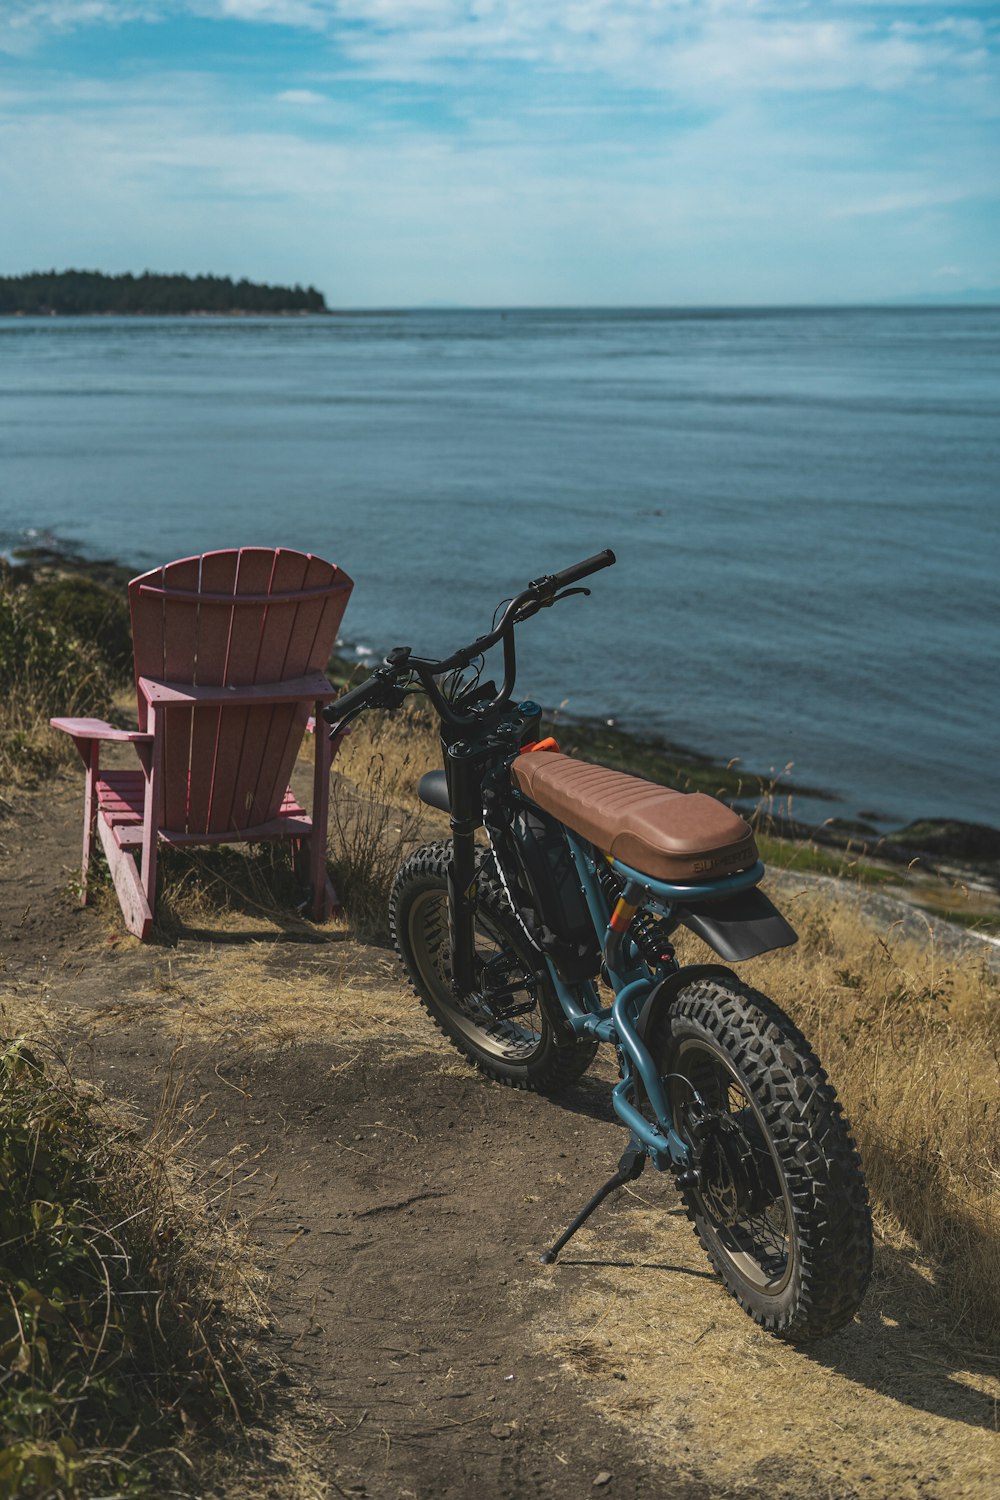 a dirt bike parked next to a pink chair